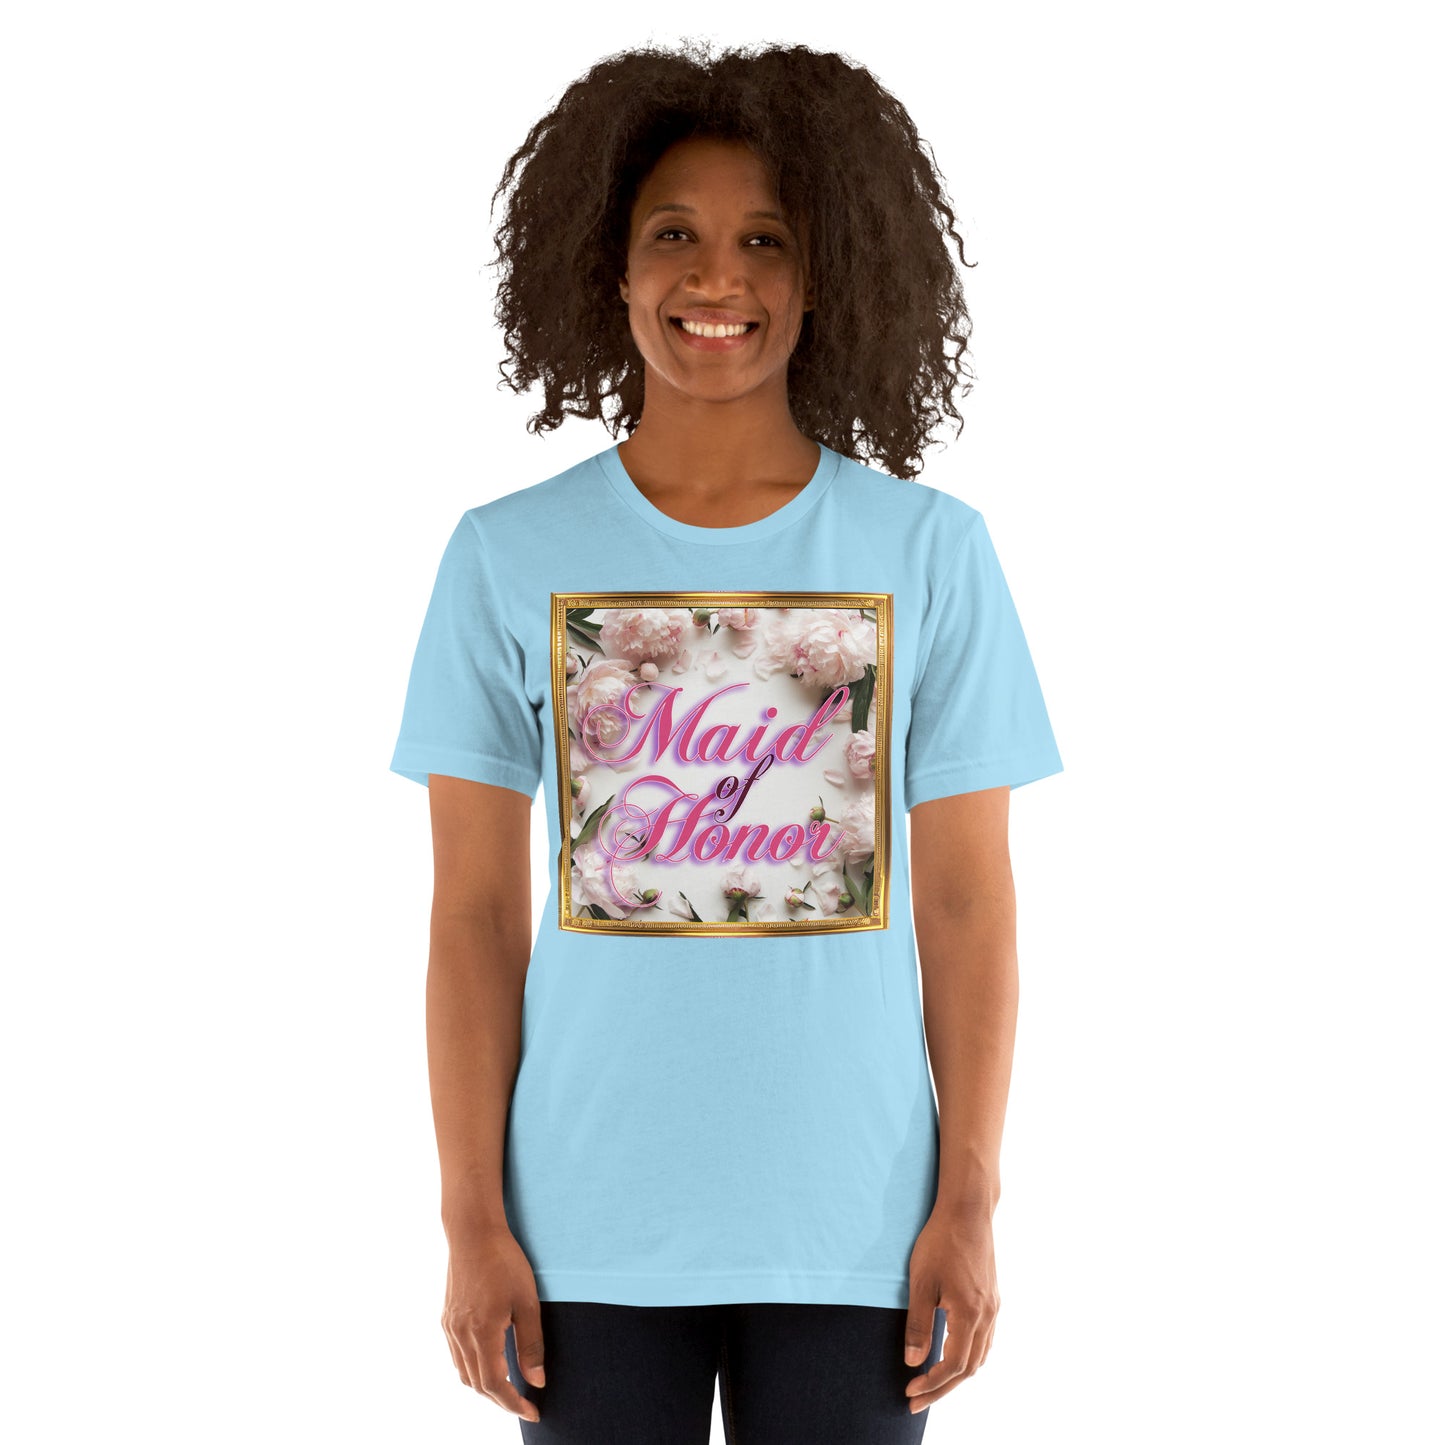 Maid of Honor Unisex t-shirt